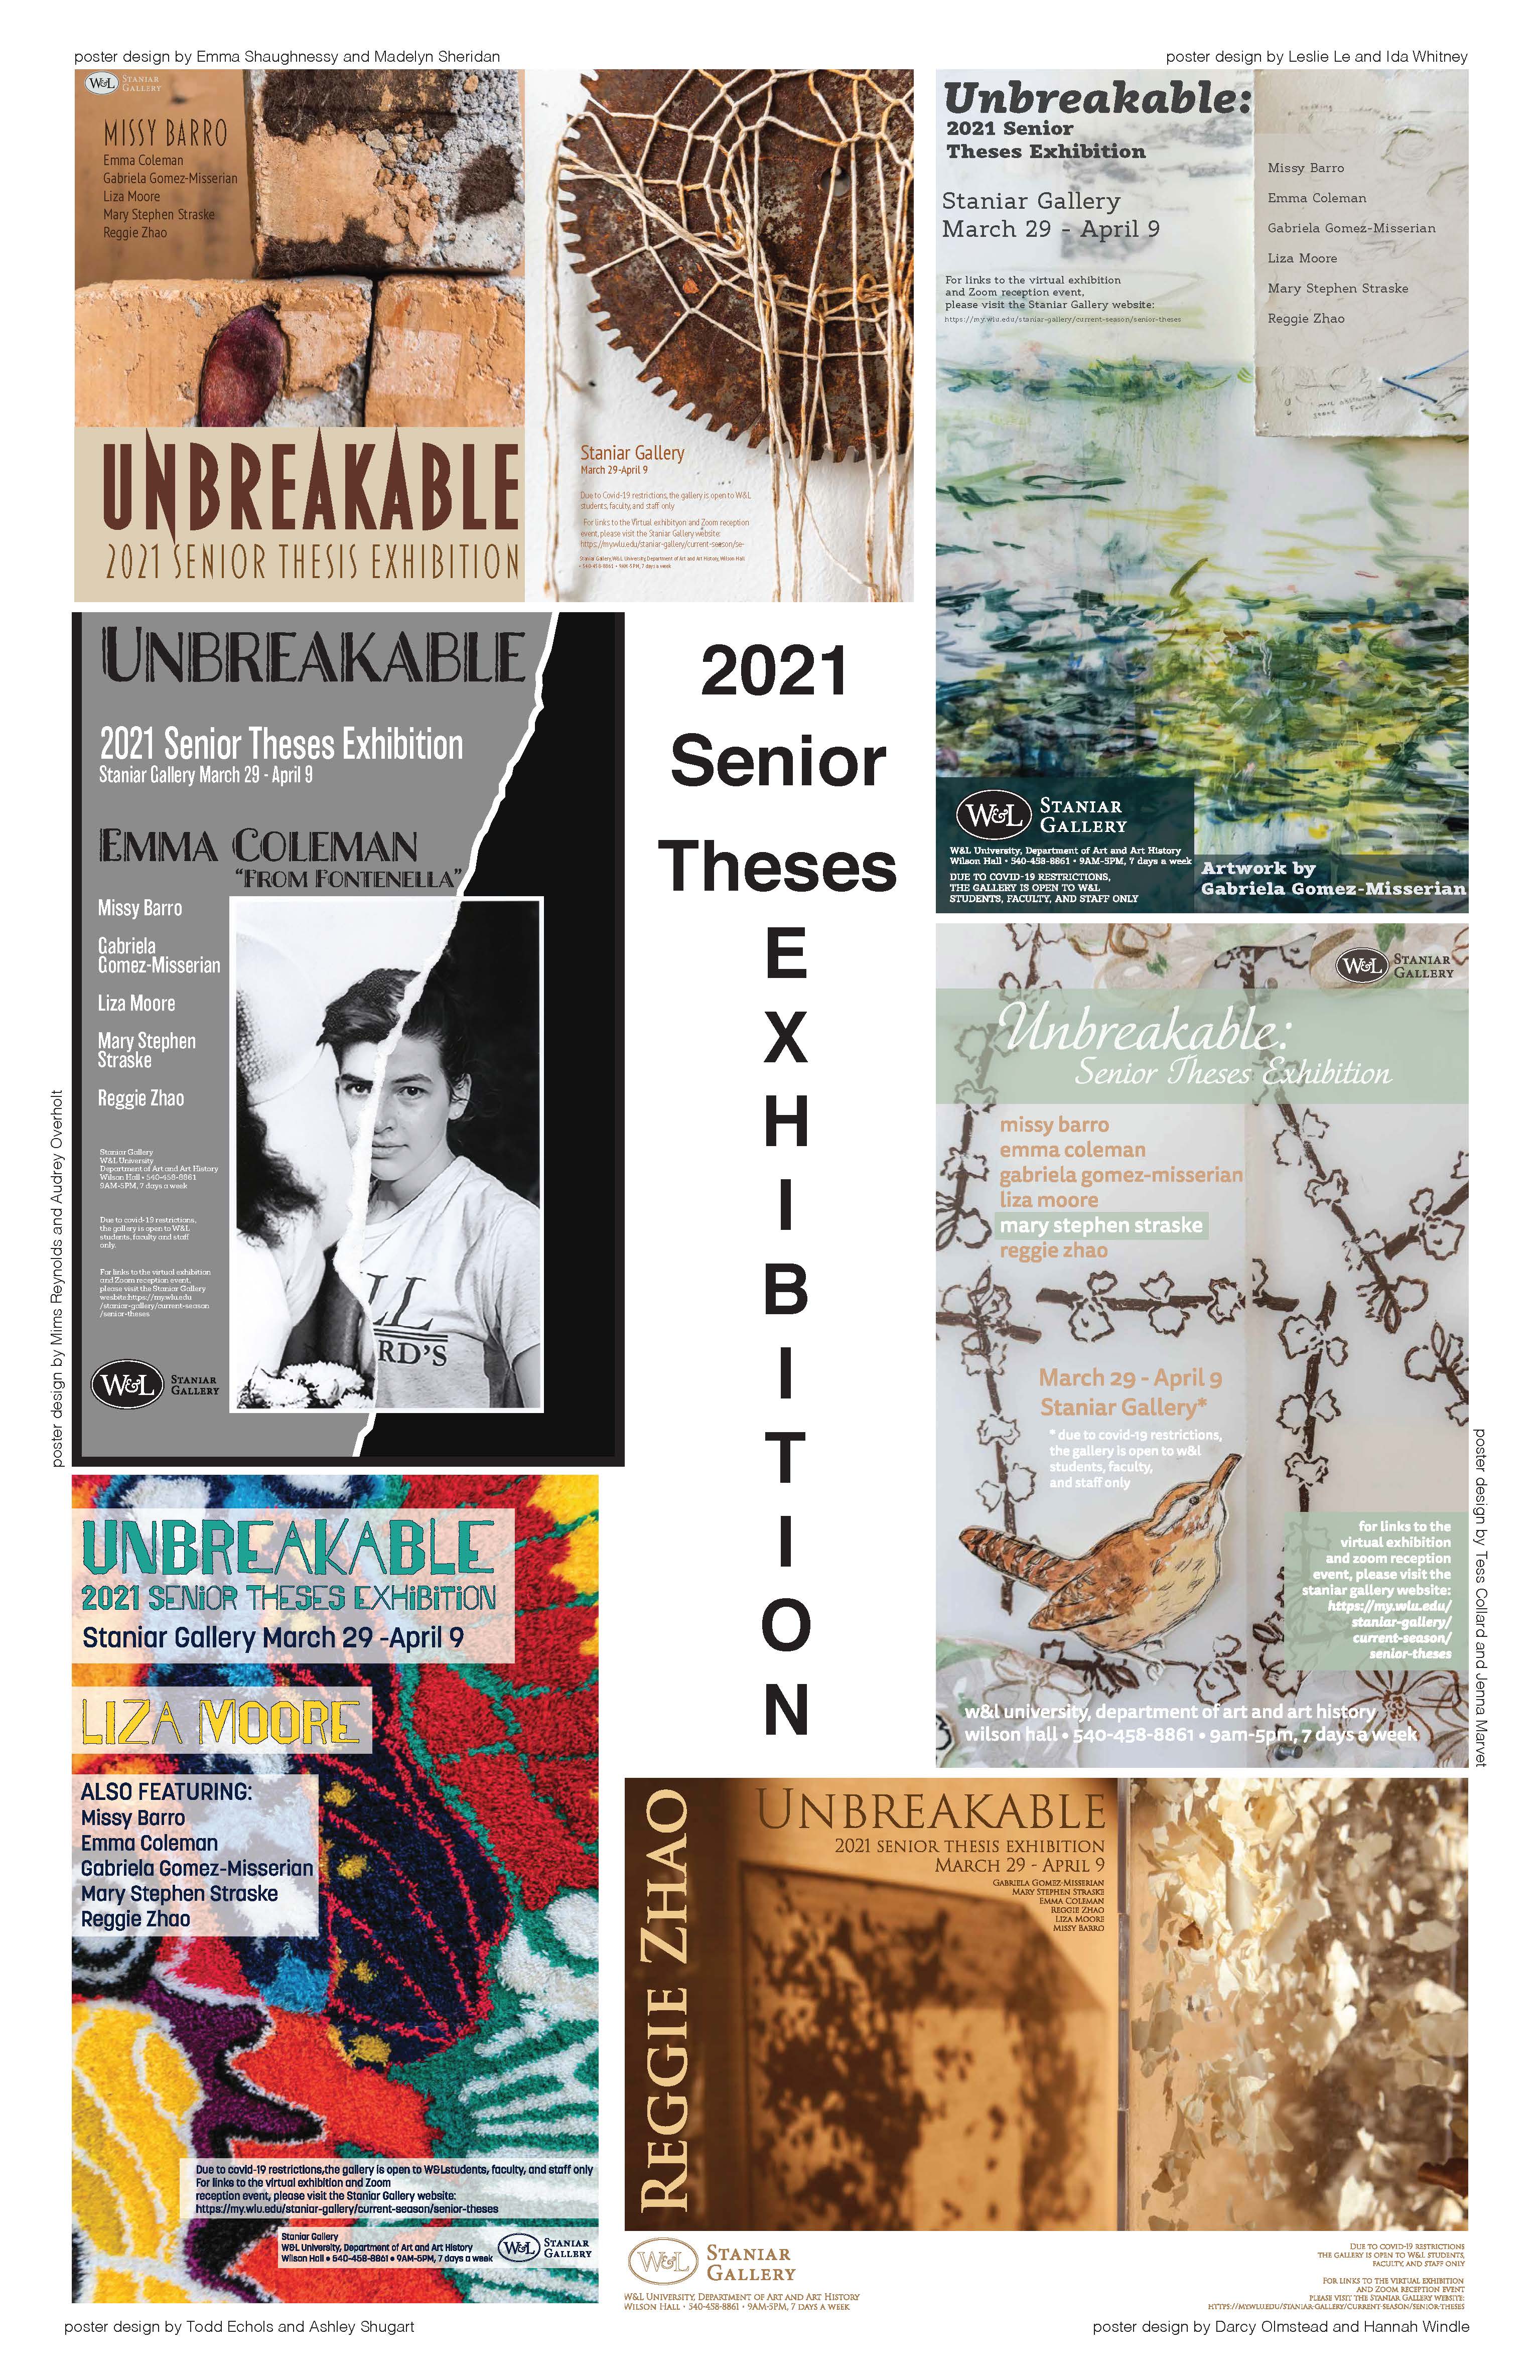 Unbreakable: Senior Theses Exhibition 2021